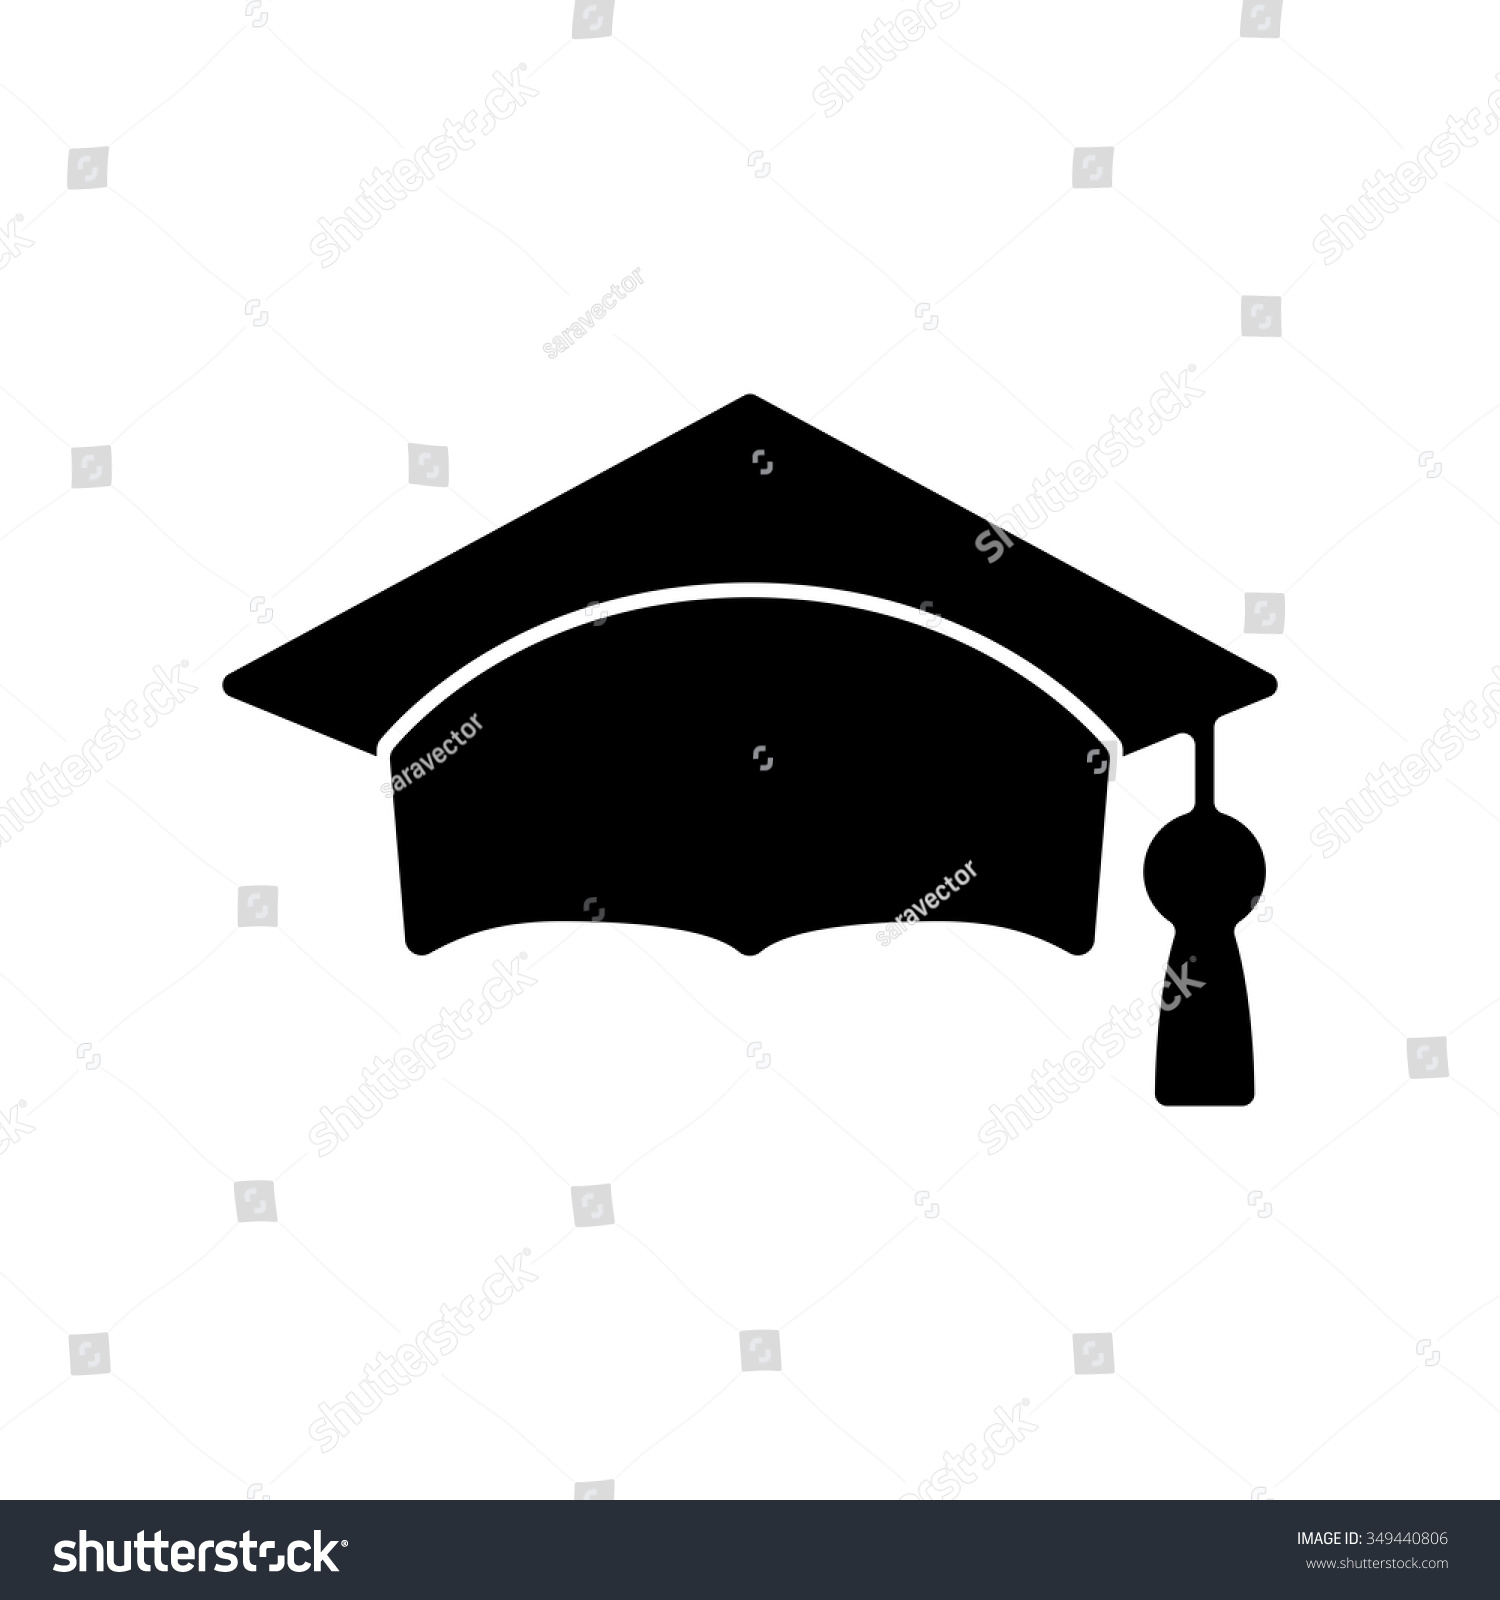 Cute school, college, university poster - graduation cap 